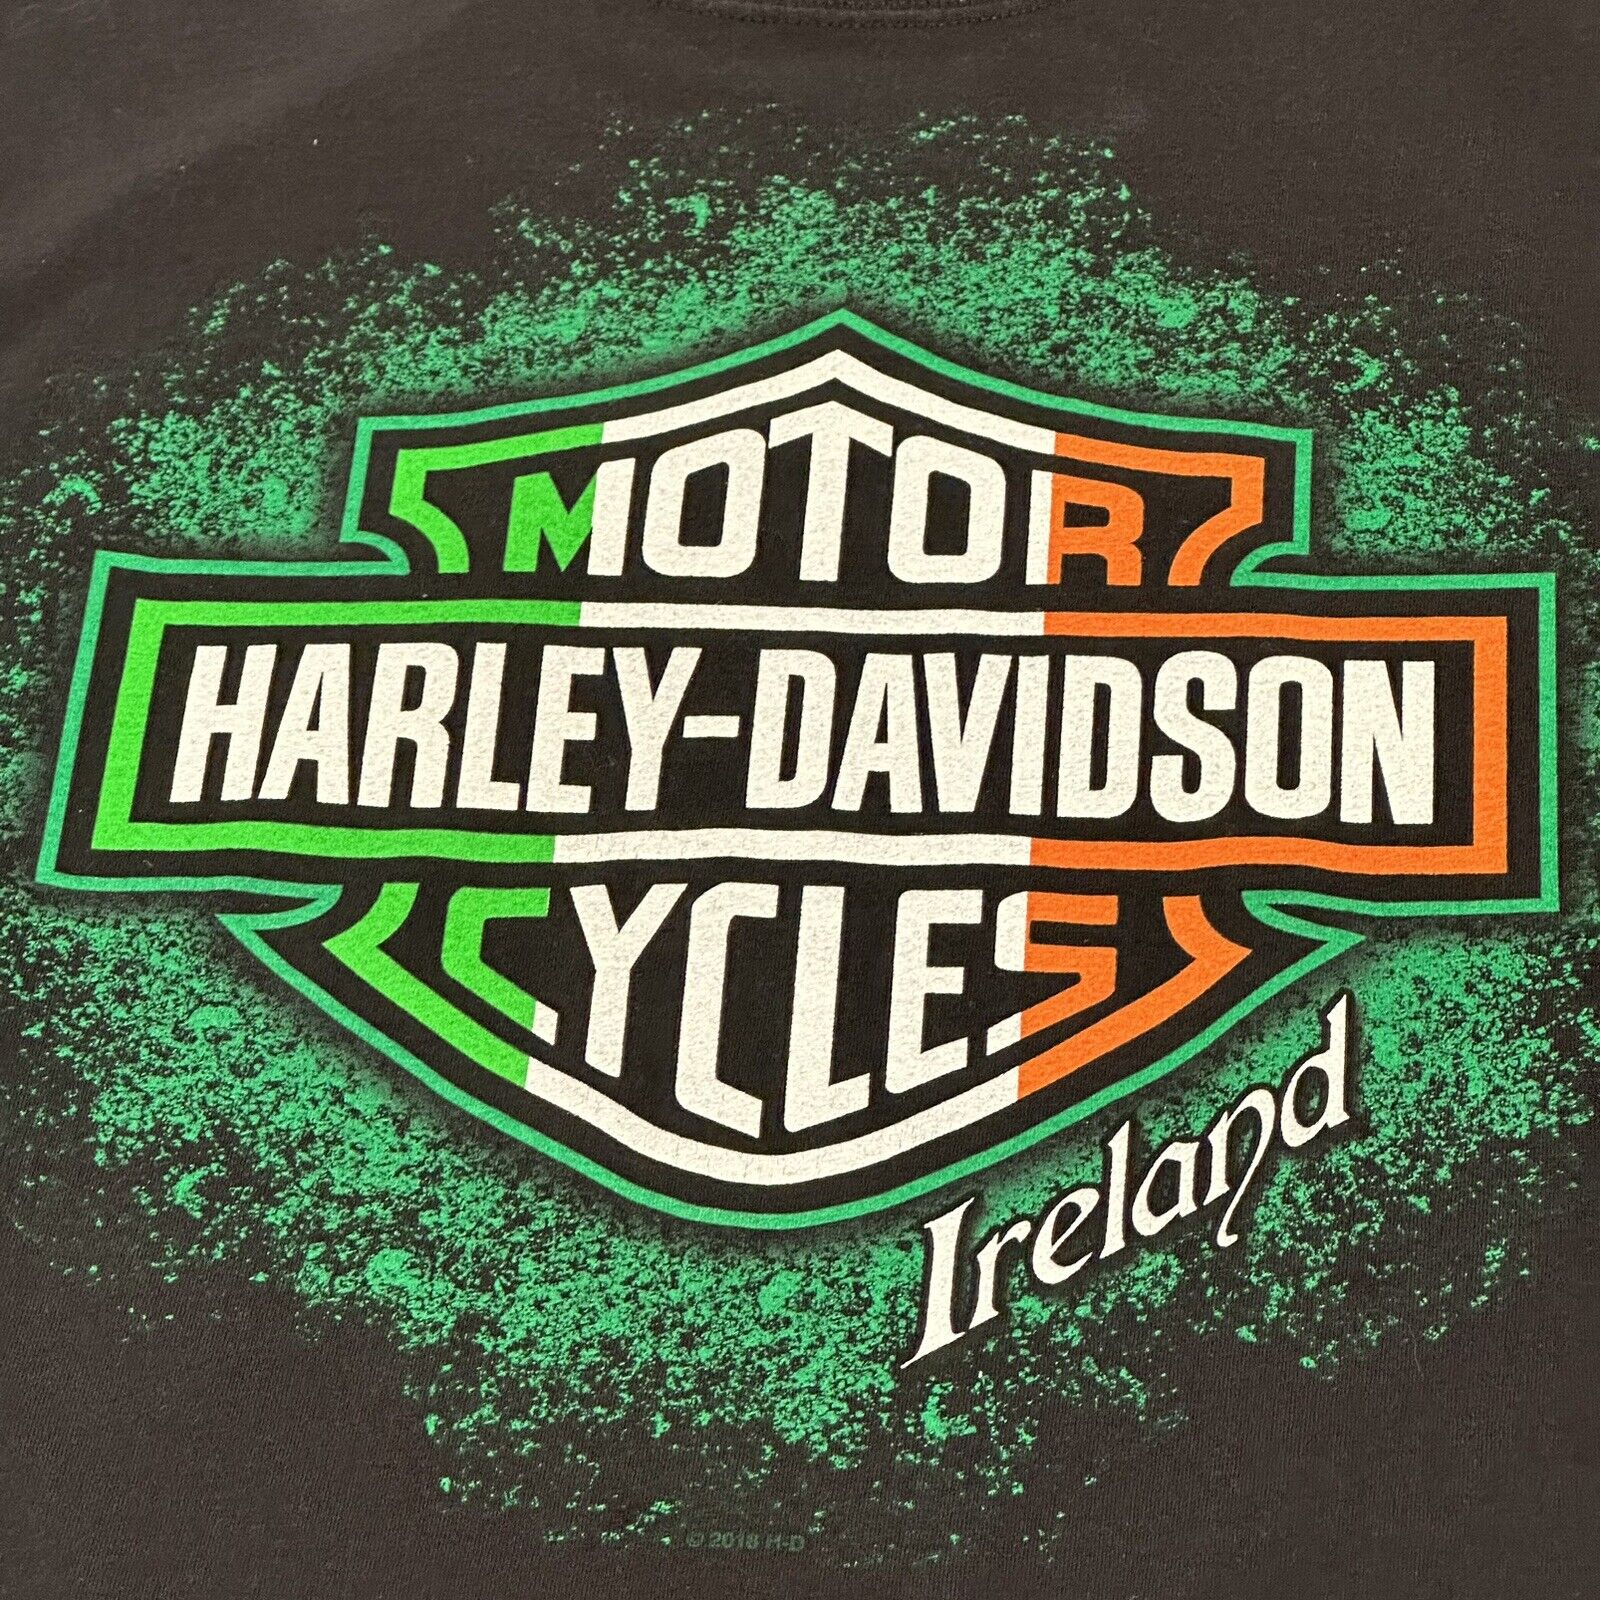 Harley Davidson Motorcycles Waterford City Ireland Black T Shirt Graphic Sz XL